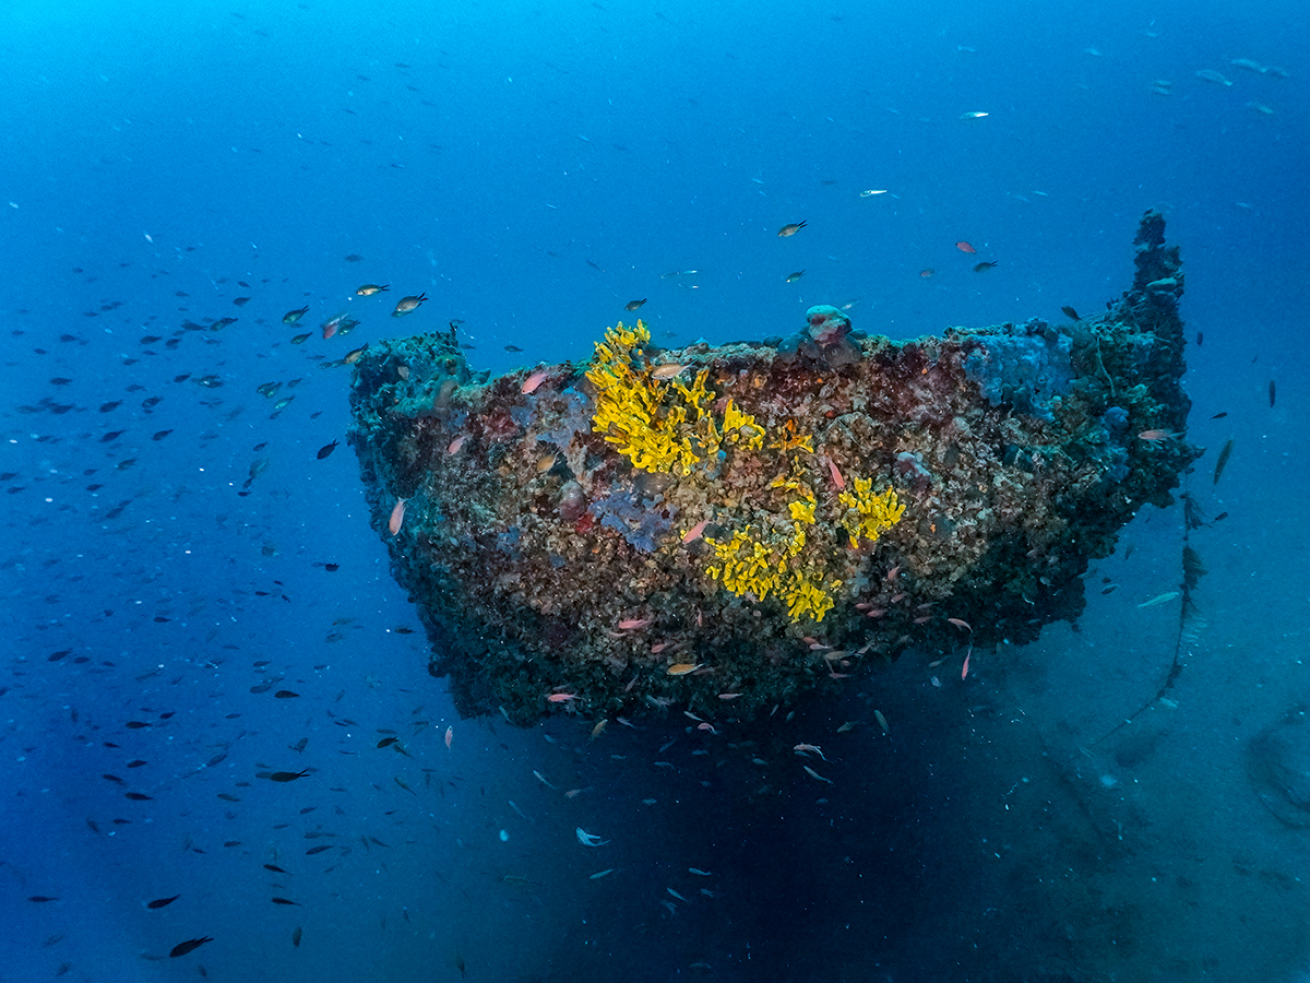 Fish swimming around a shipwreck.